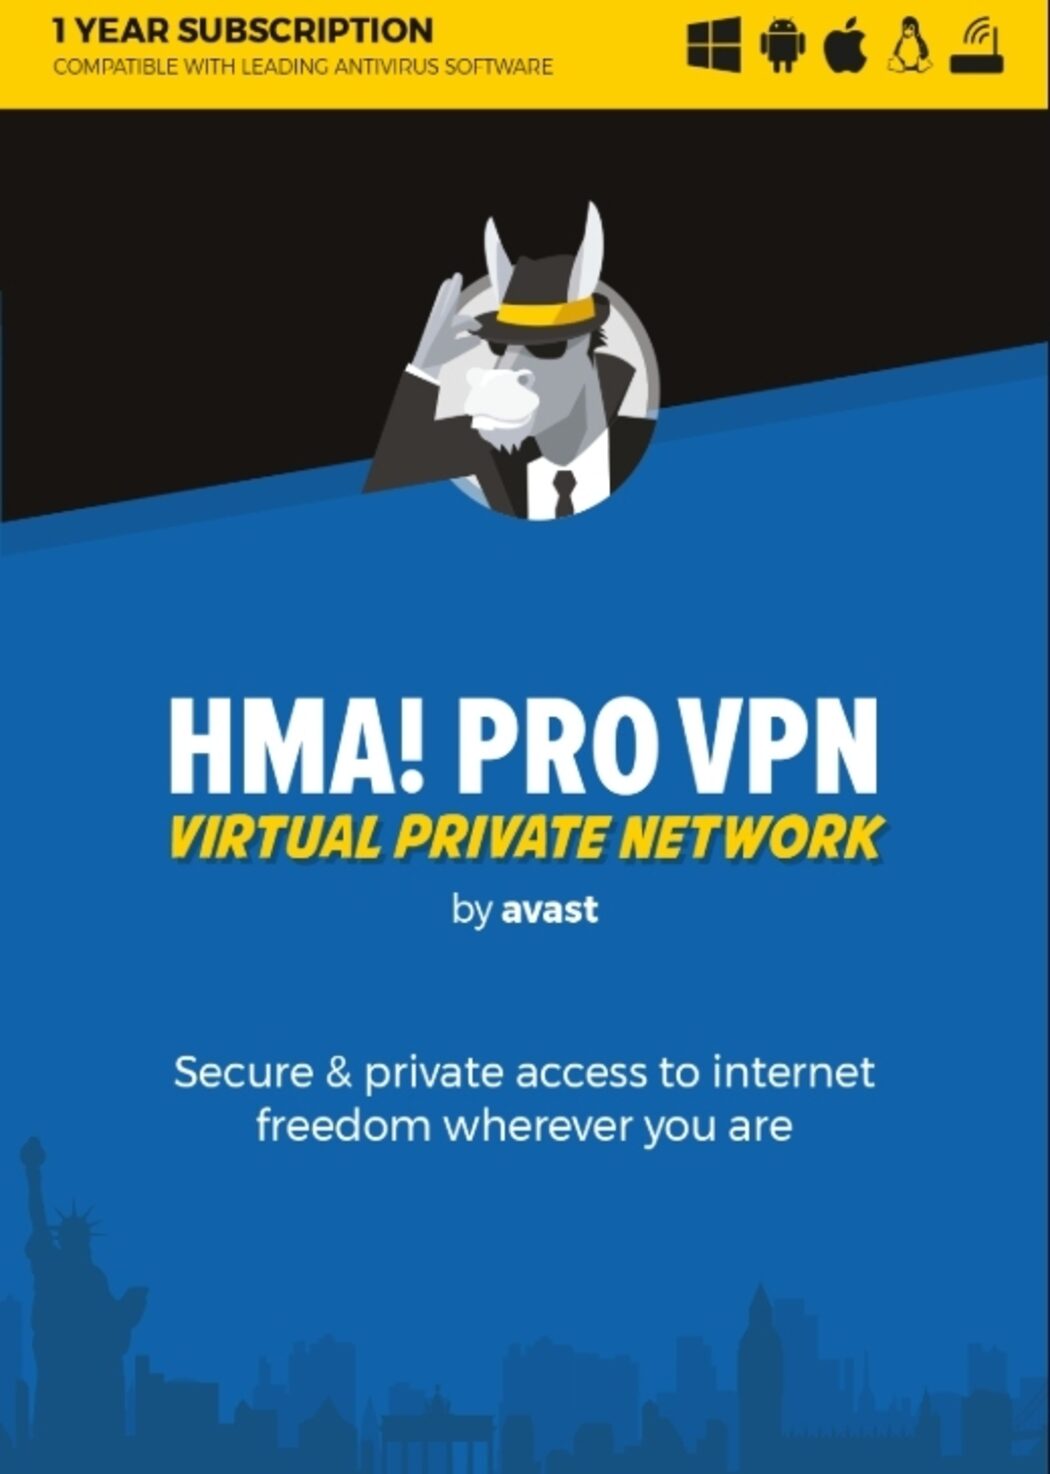 AVAST HMA VPN